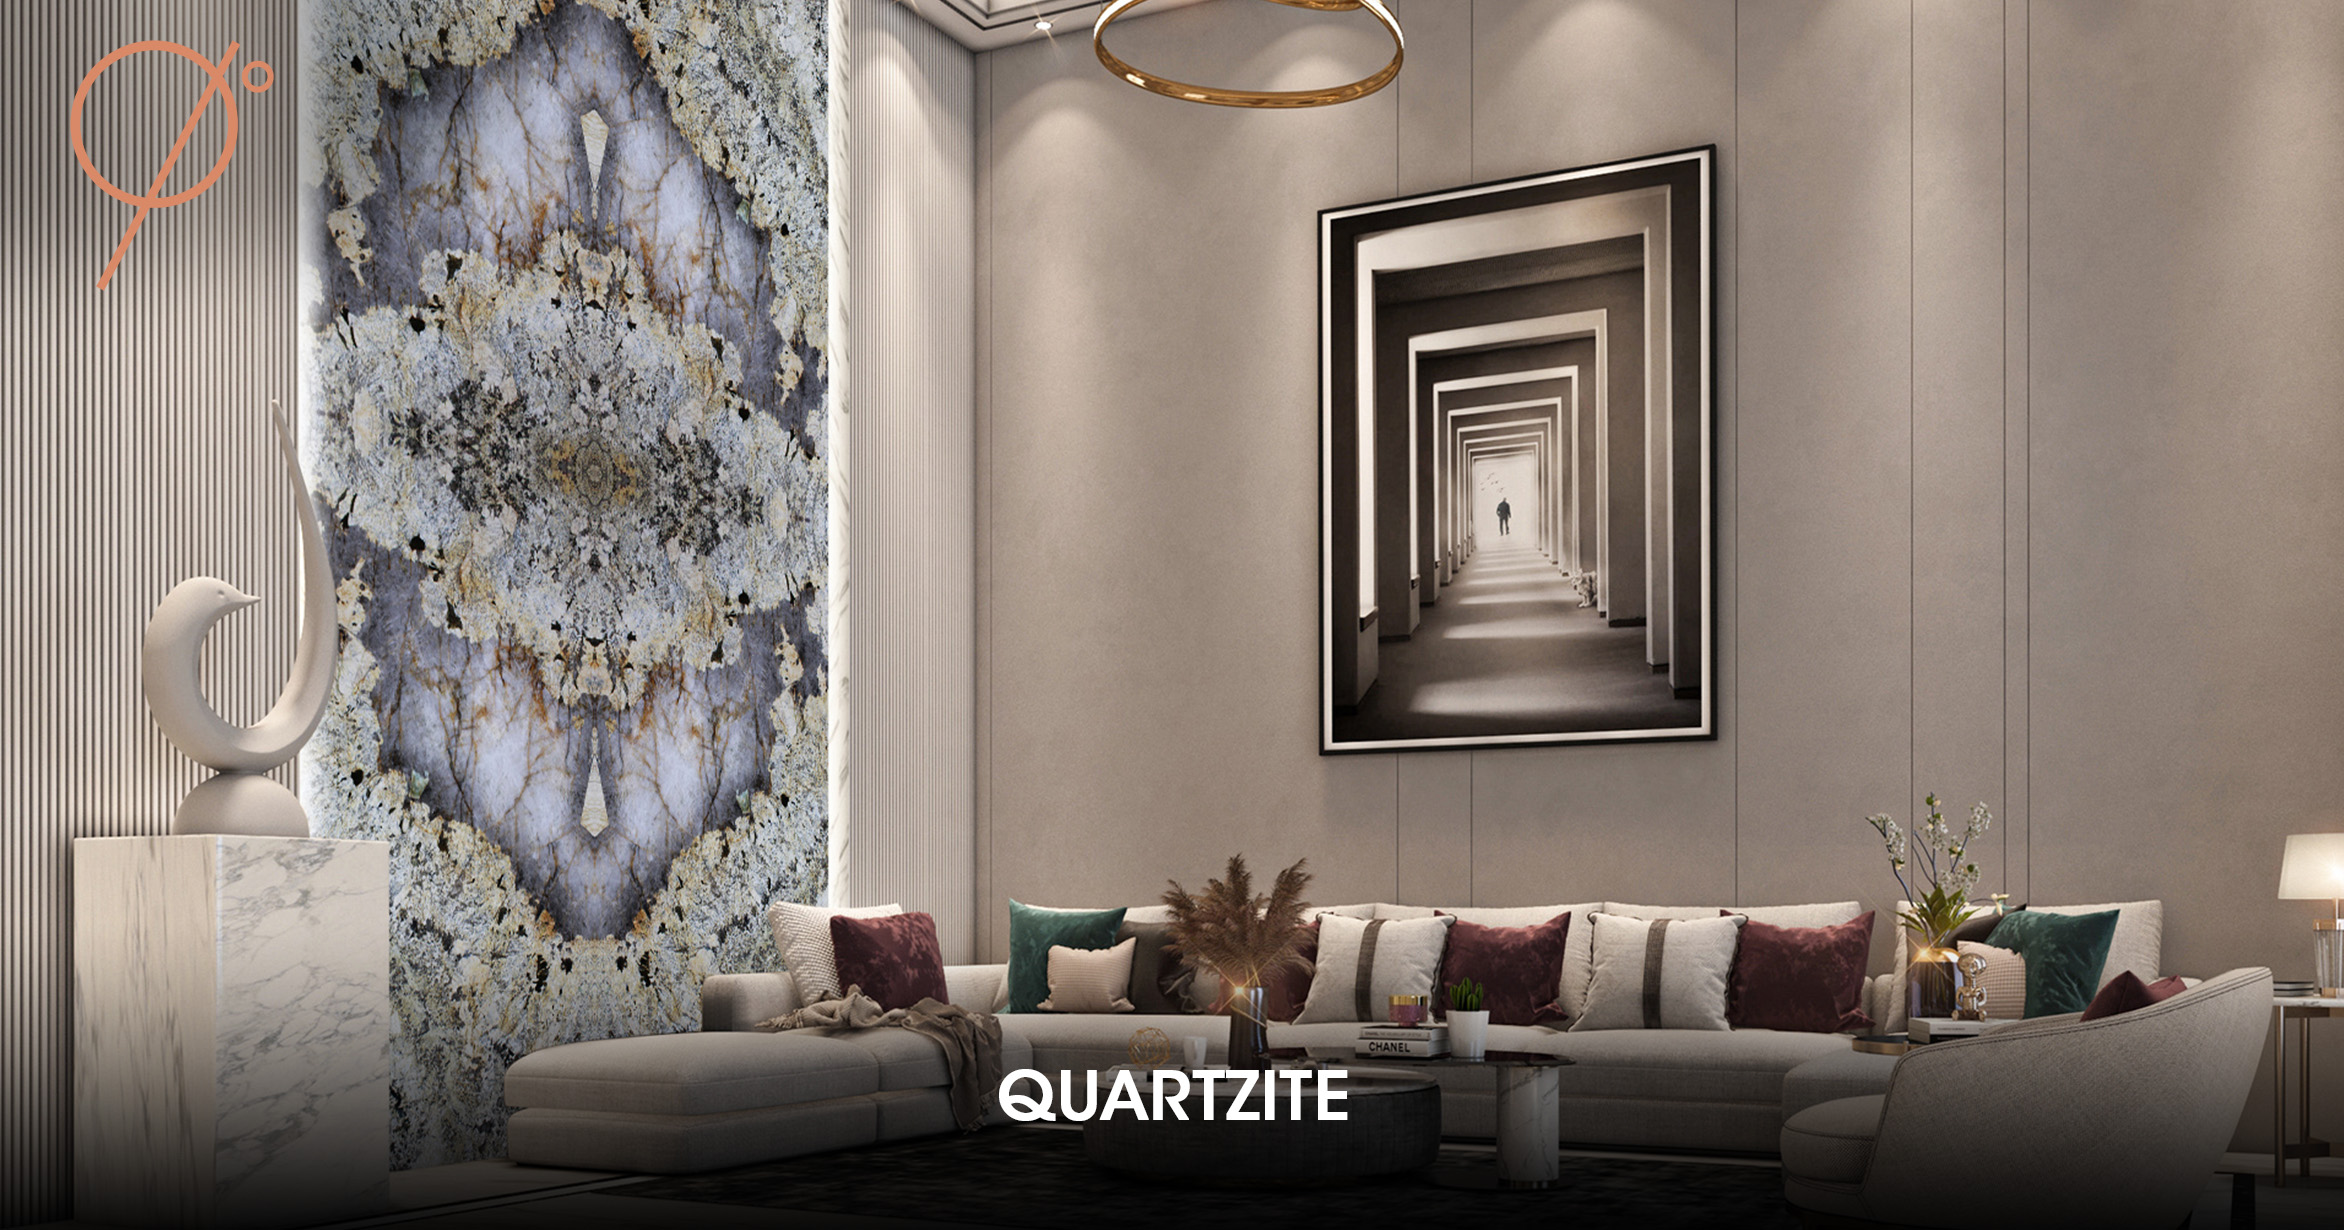 Quartzite wall highlight 